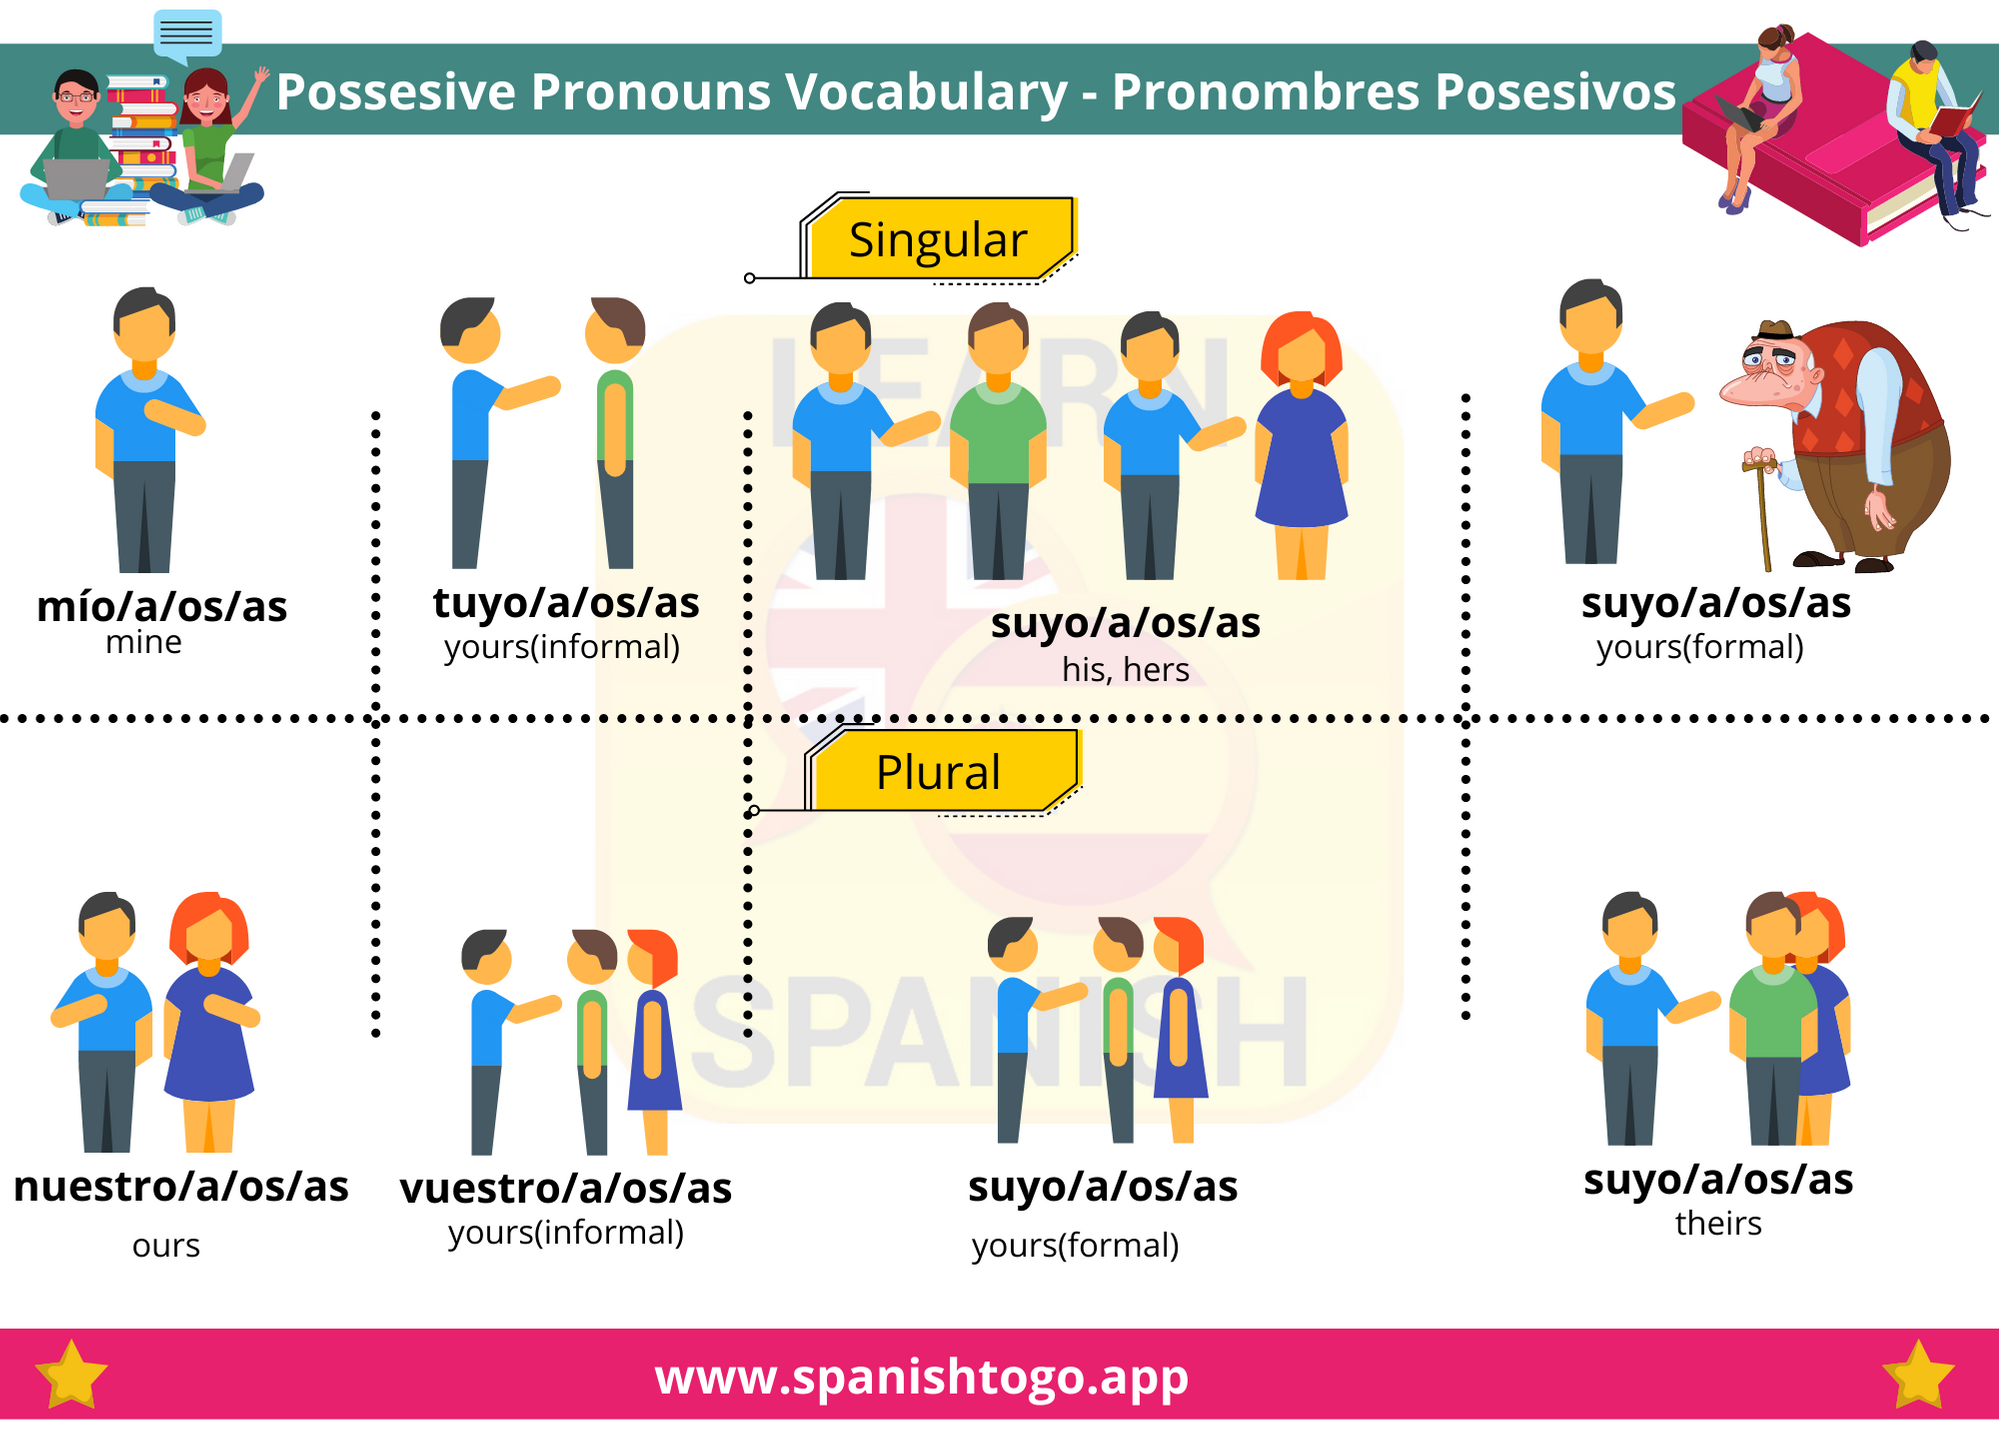 english-to-spanish-possessive-pronouns-in-spanish